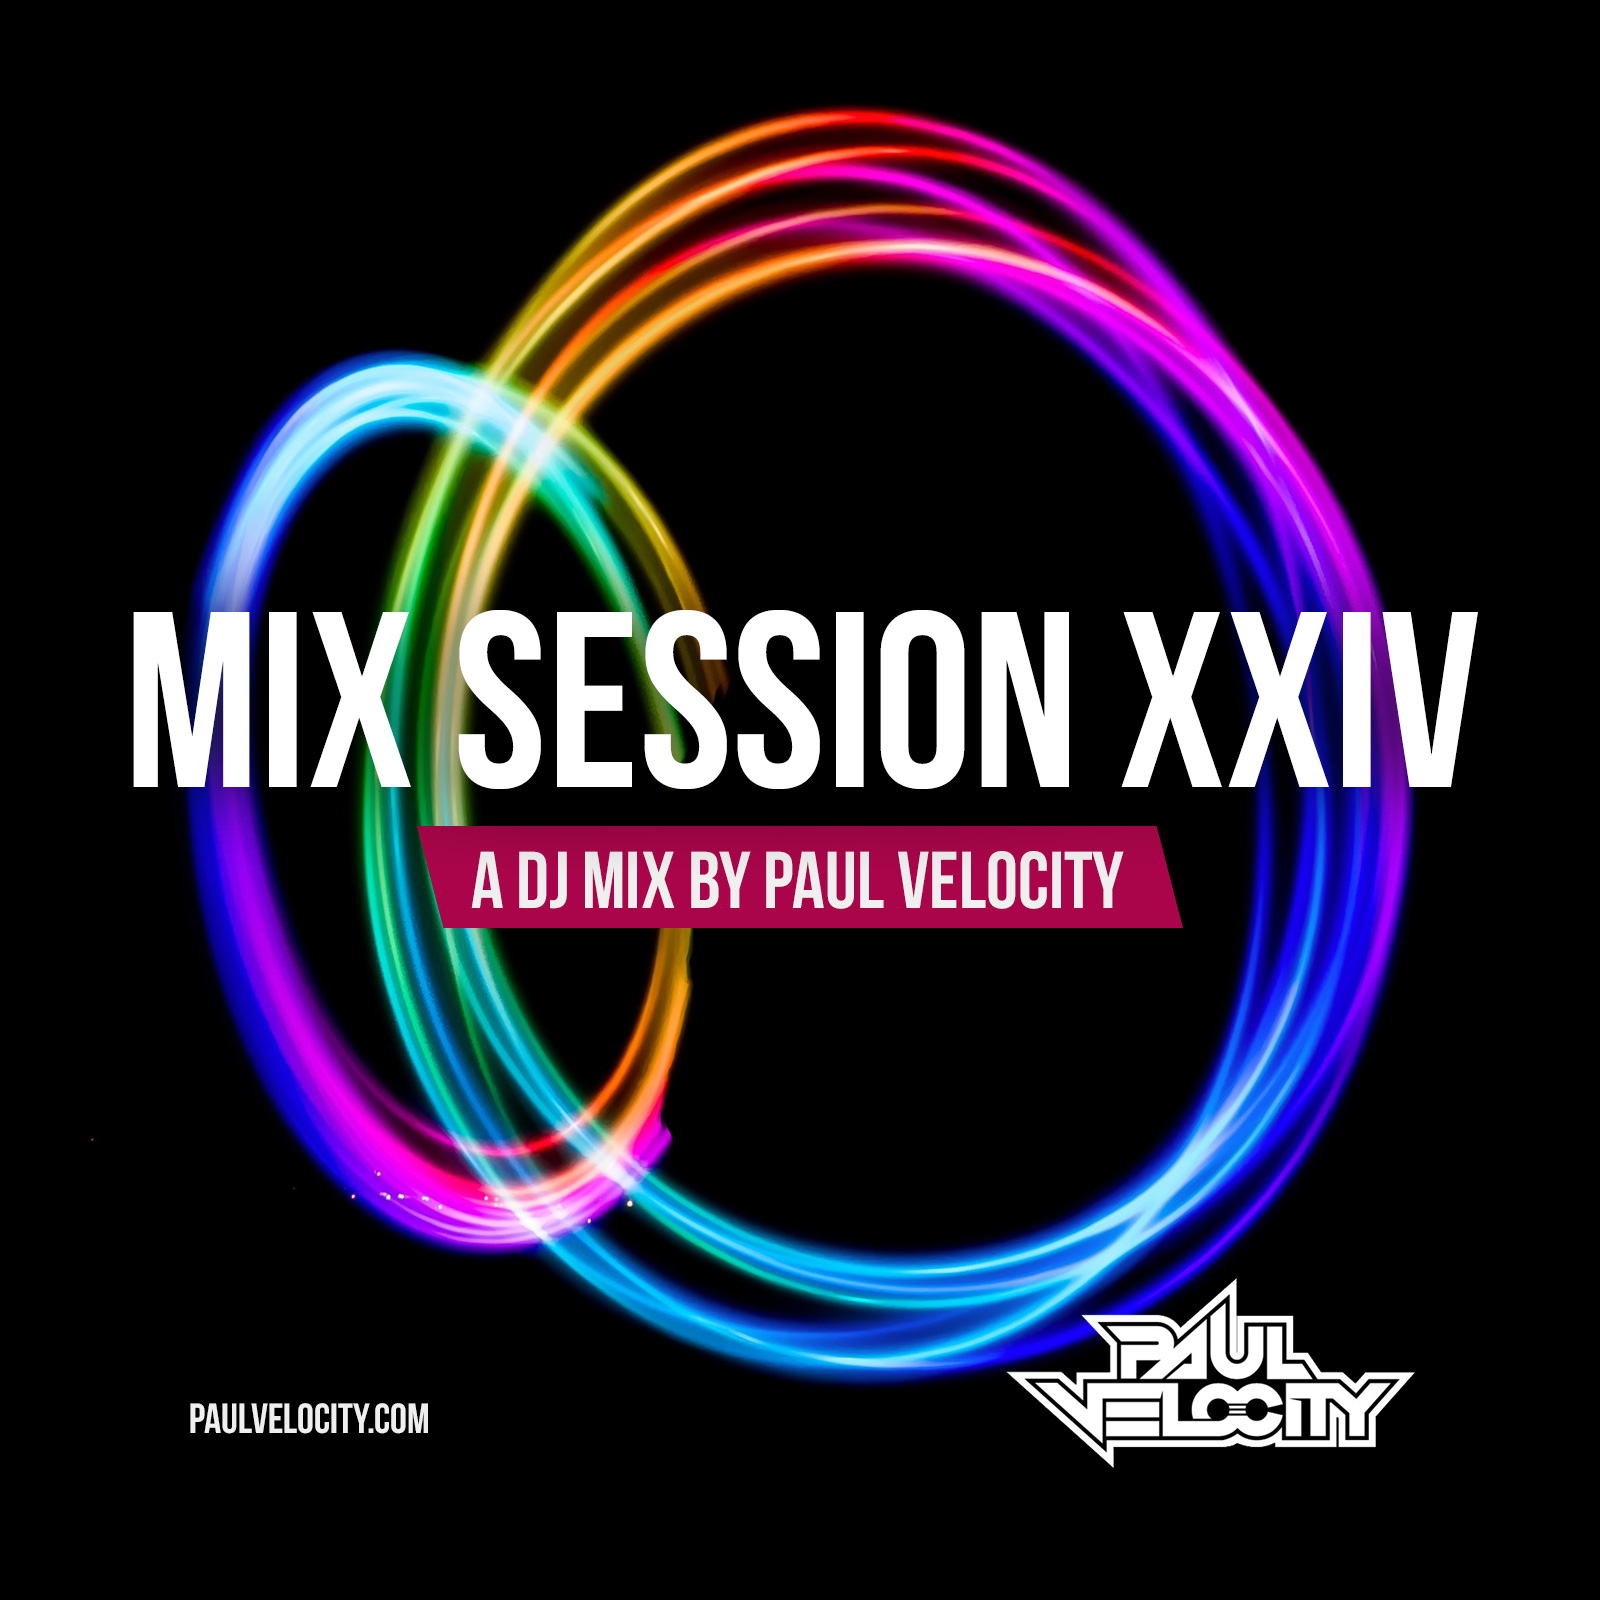 Mix Session XXIV